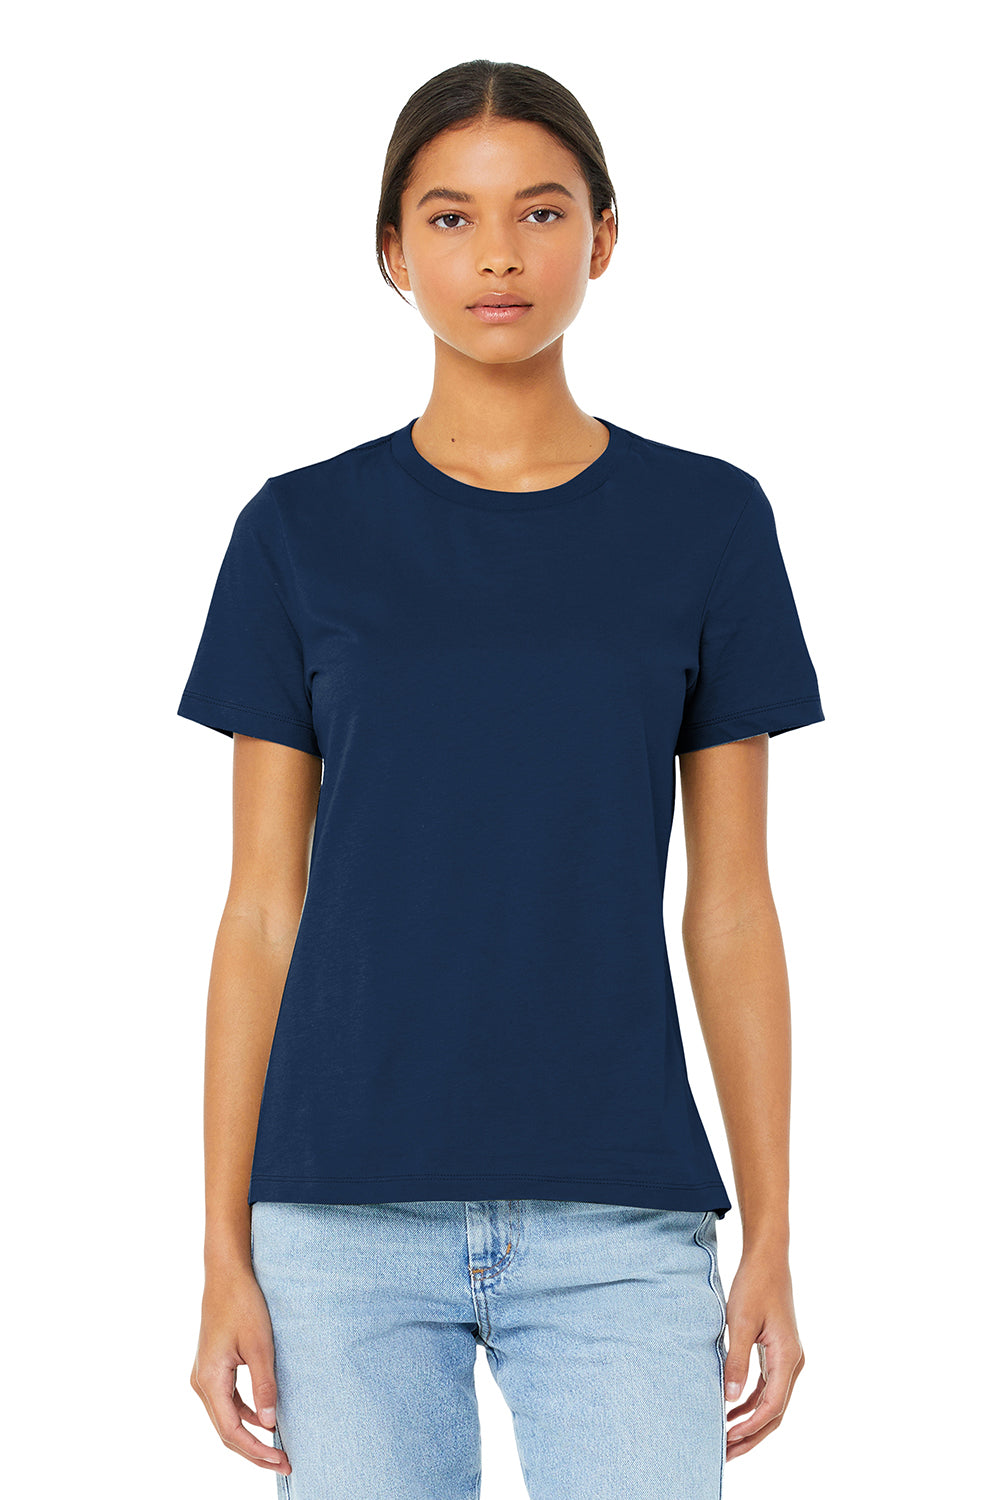 Bella + Canvas BC6400/B6400/6400 Womens Relaxed Jersey Short Sleeve Crewneck T-Shirt Navy Blue Model Front